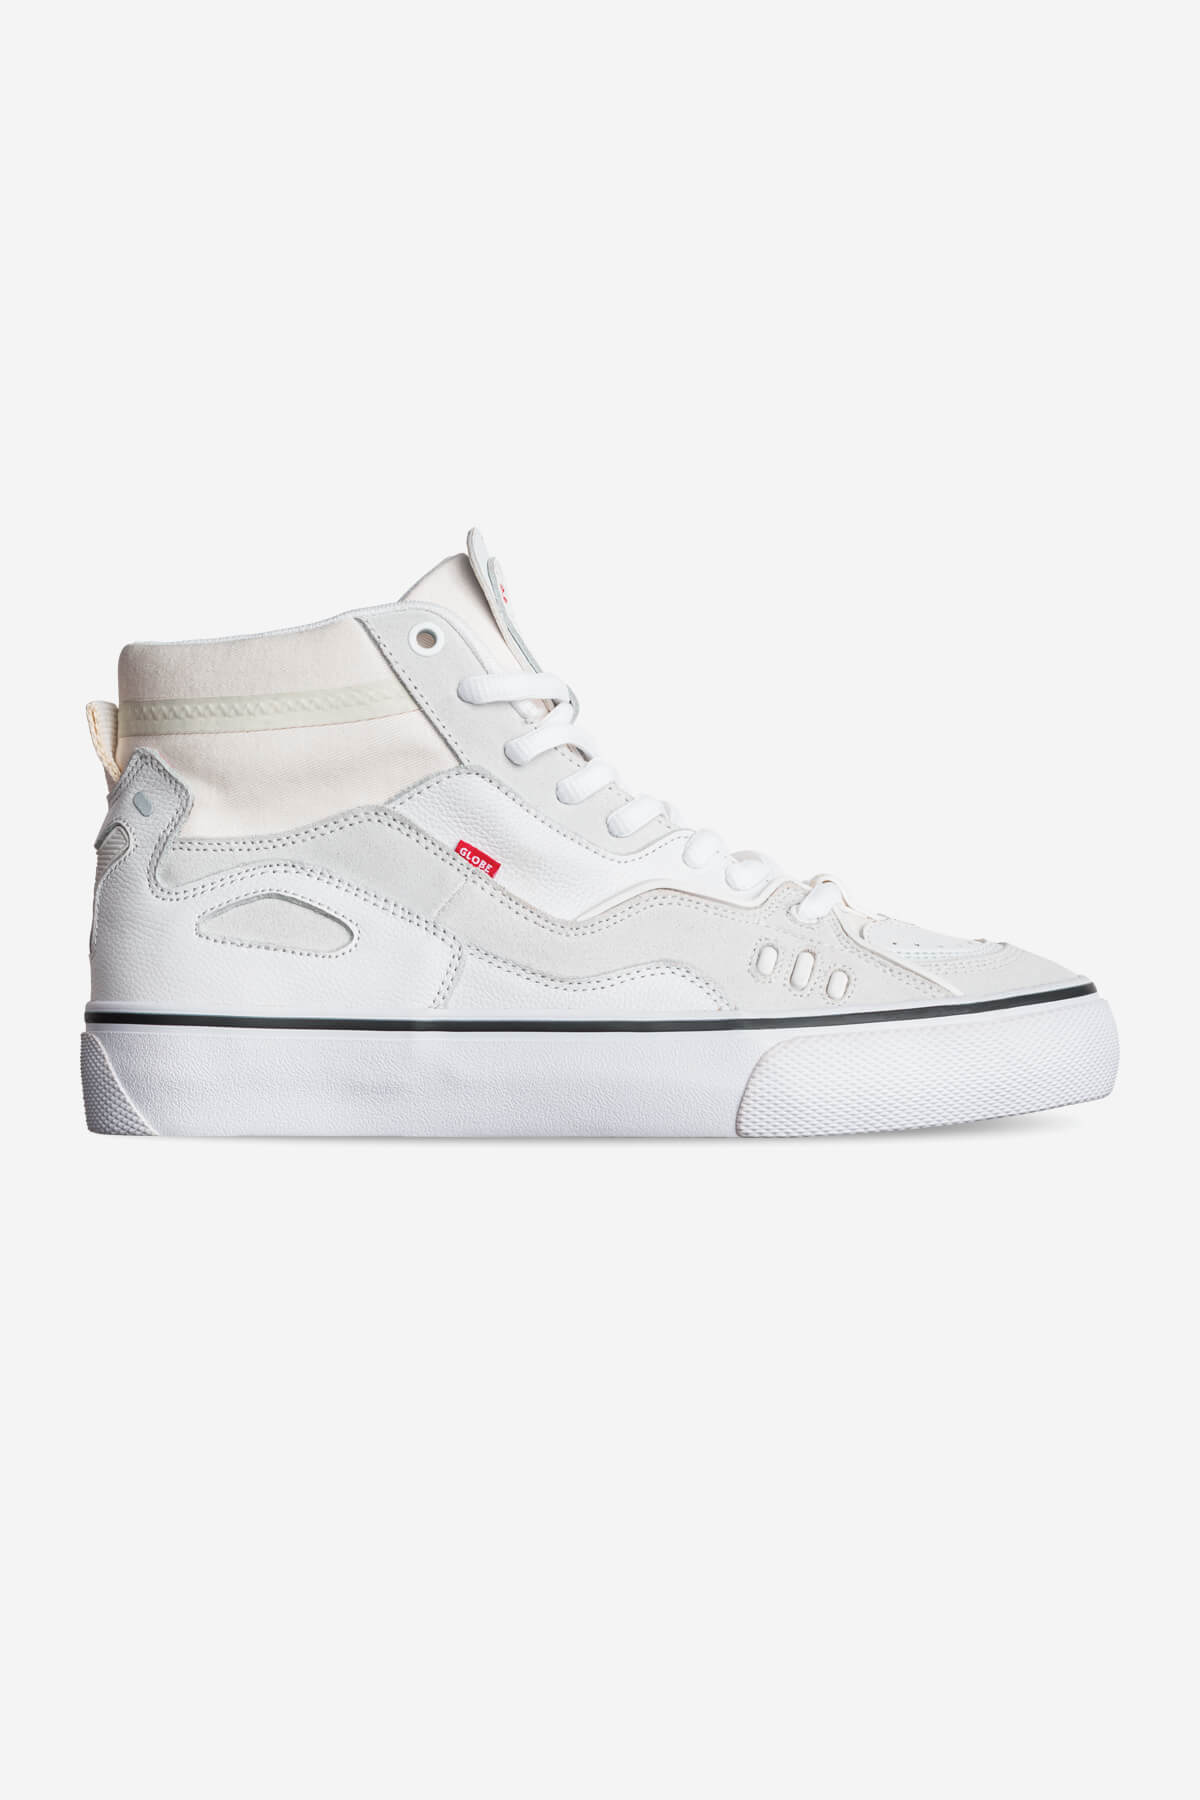 Shop Dimension - White/Montano - Skate Shoes